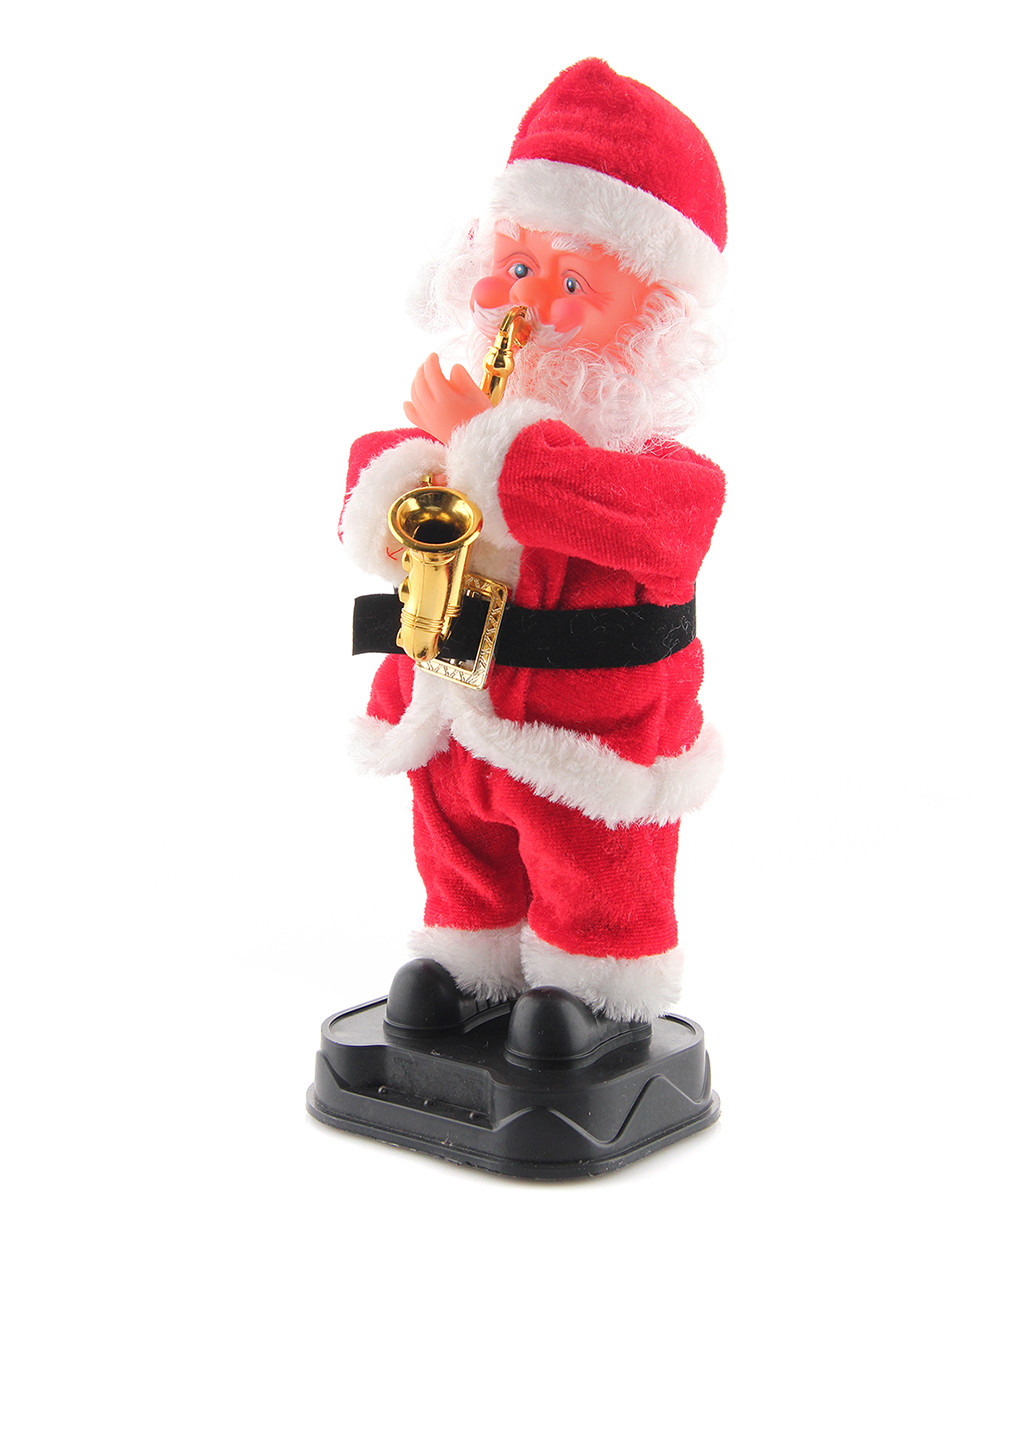 Музыкальная игрушка Санта Клаус UFT (56668226)